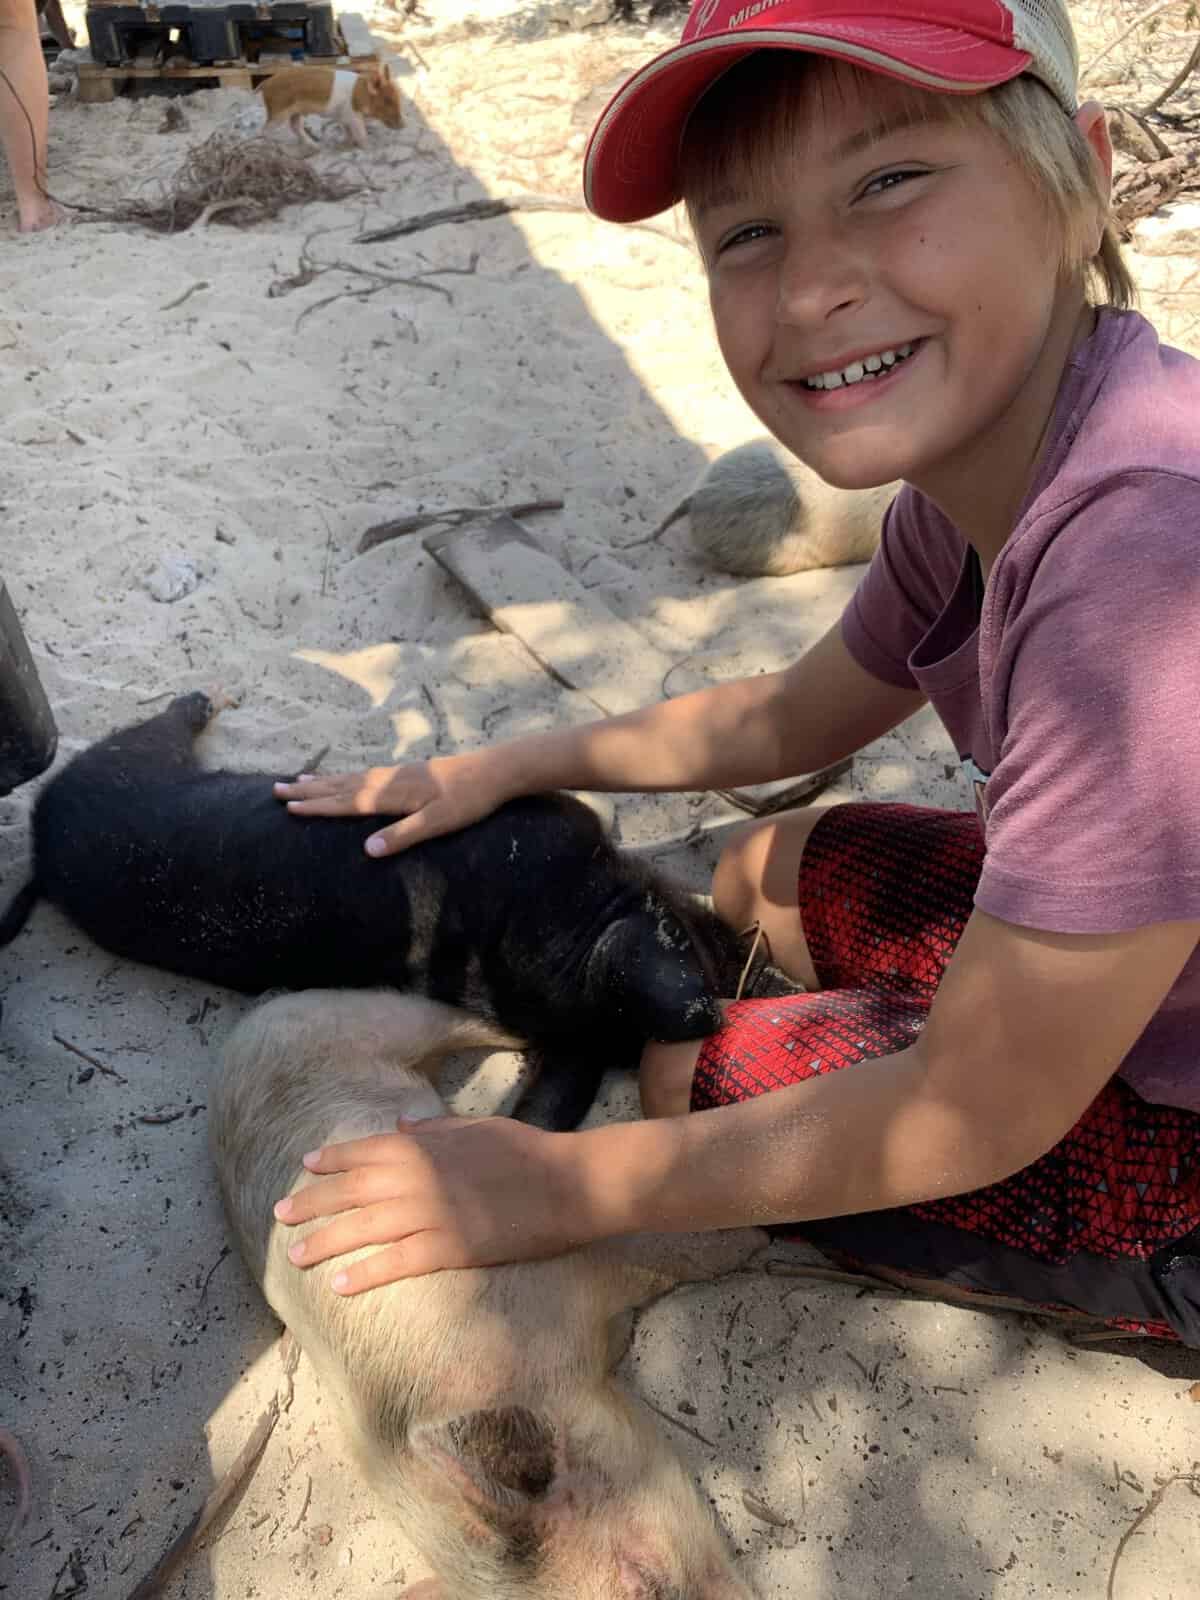 boy petting a baby pig at Pigs Beach